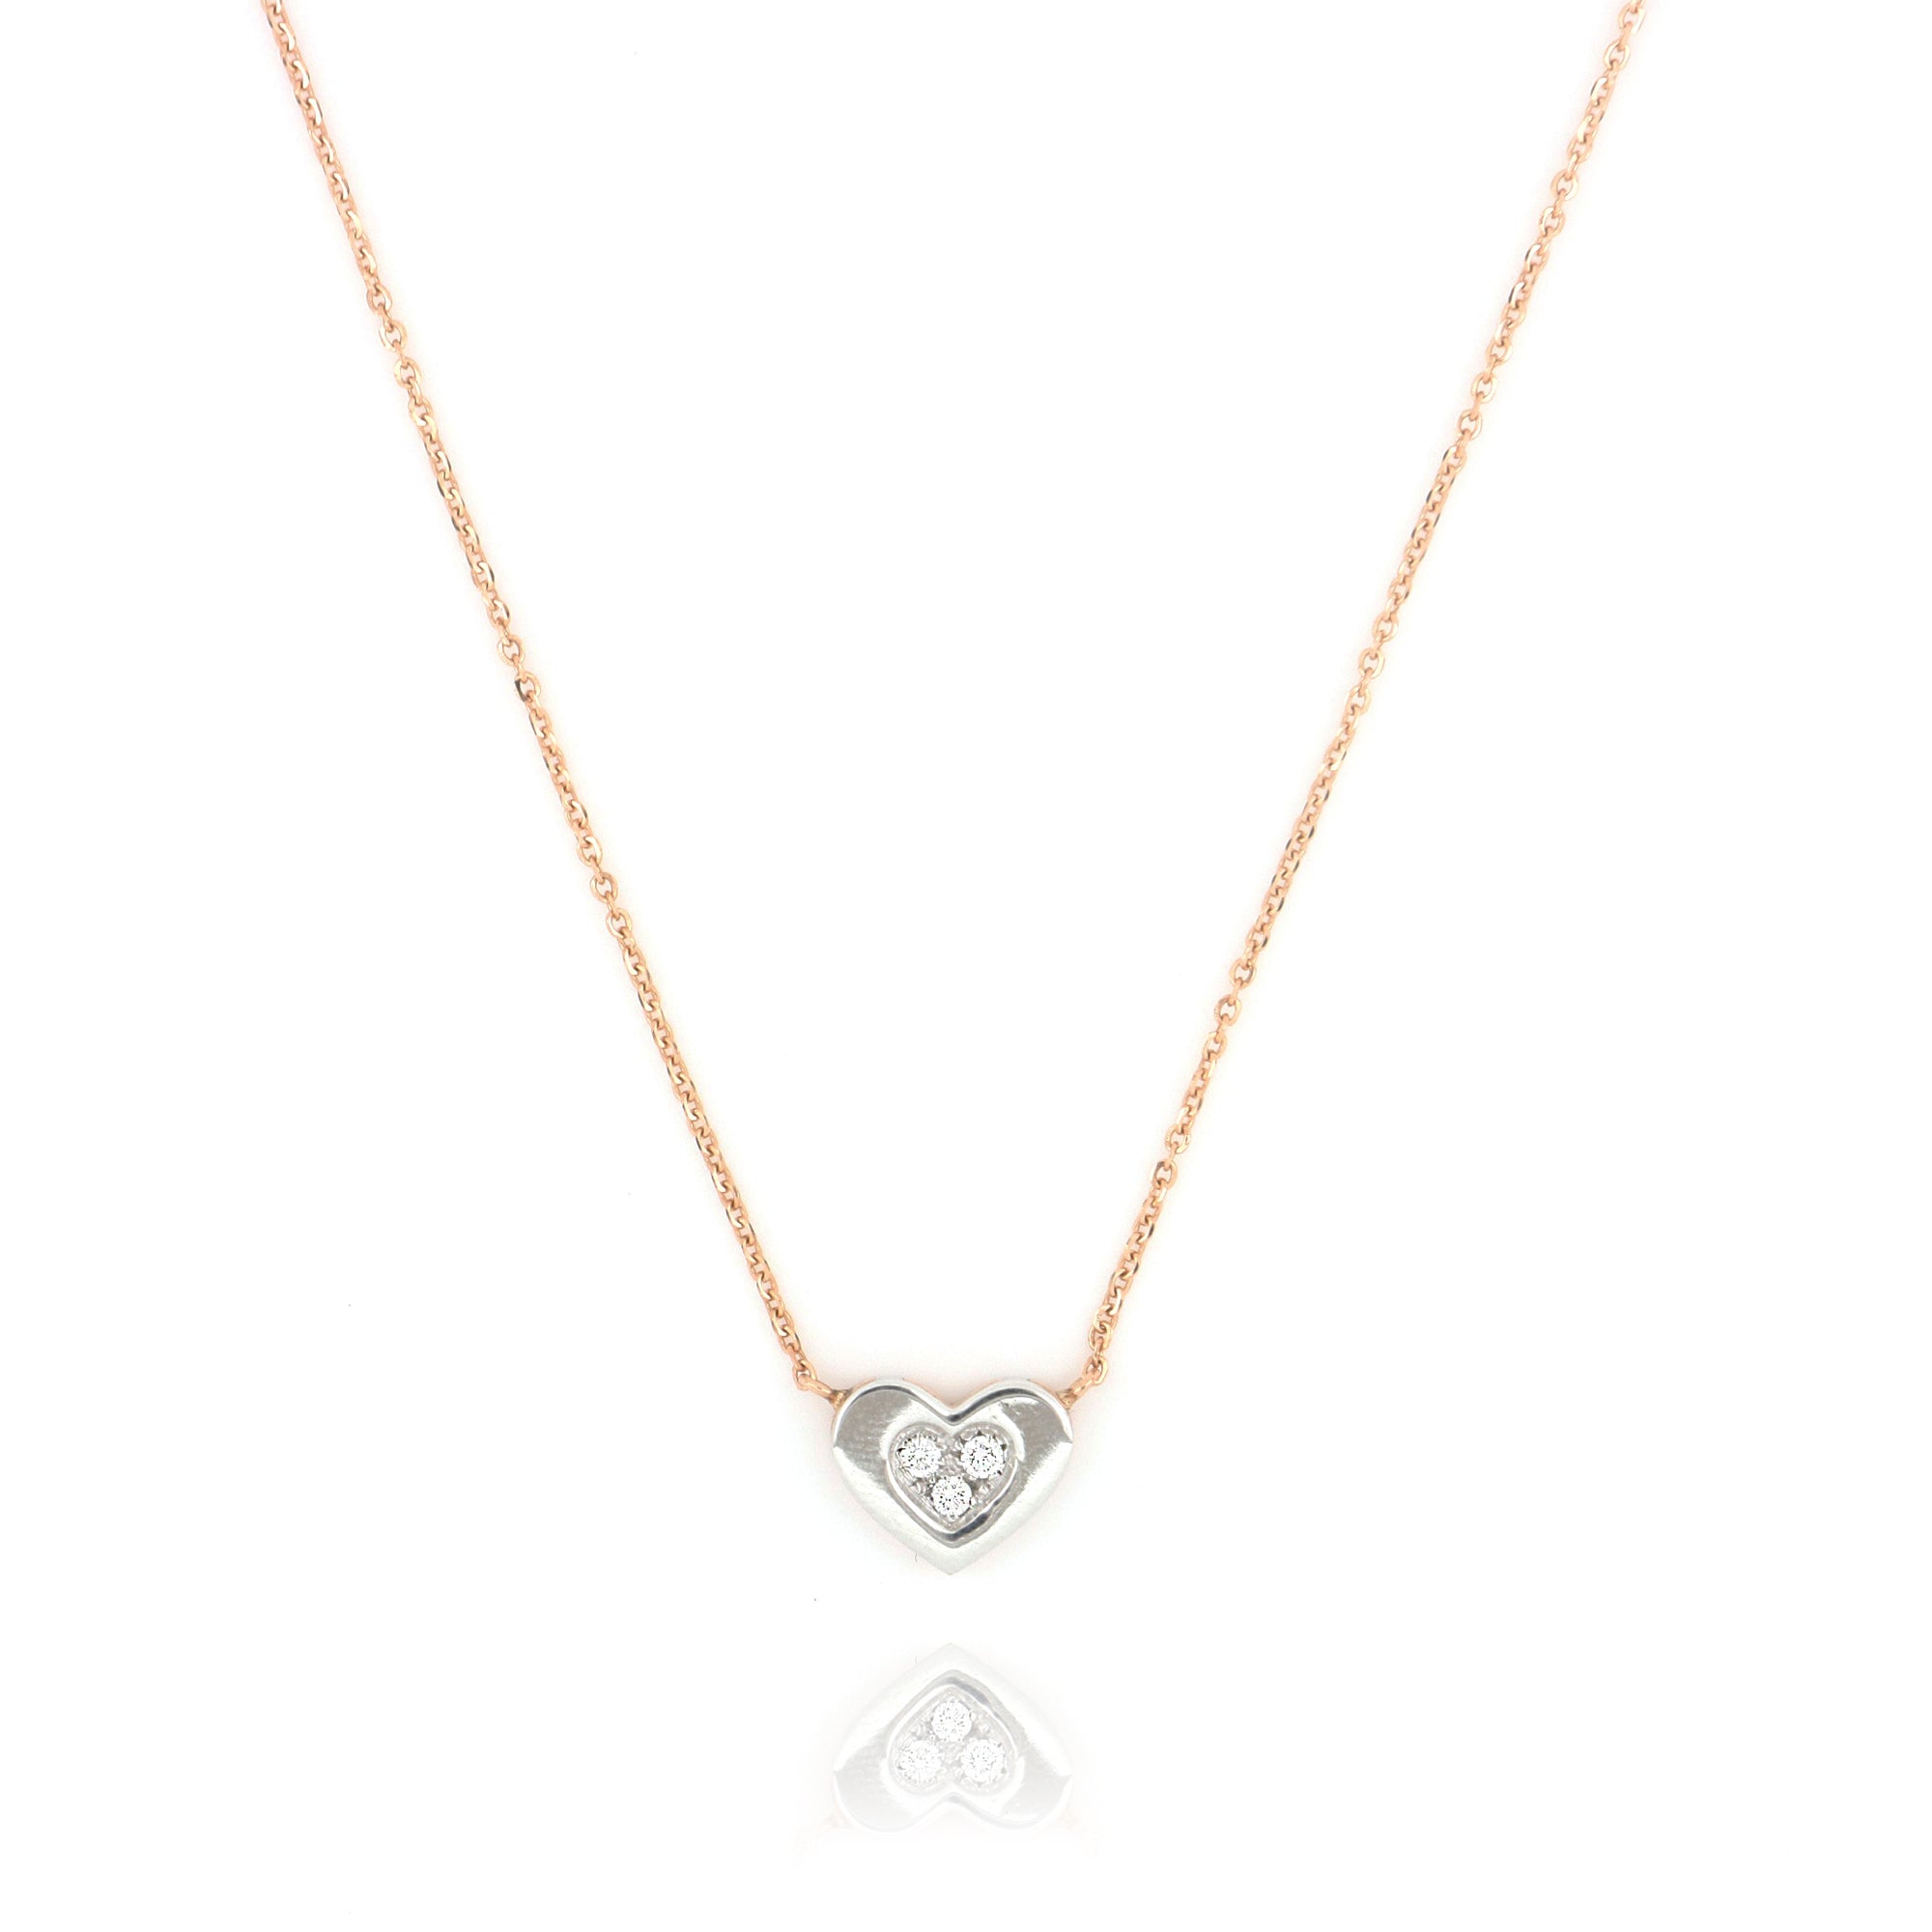 Le Secret Necklace With Heart of Diamonds